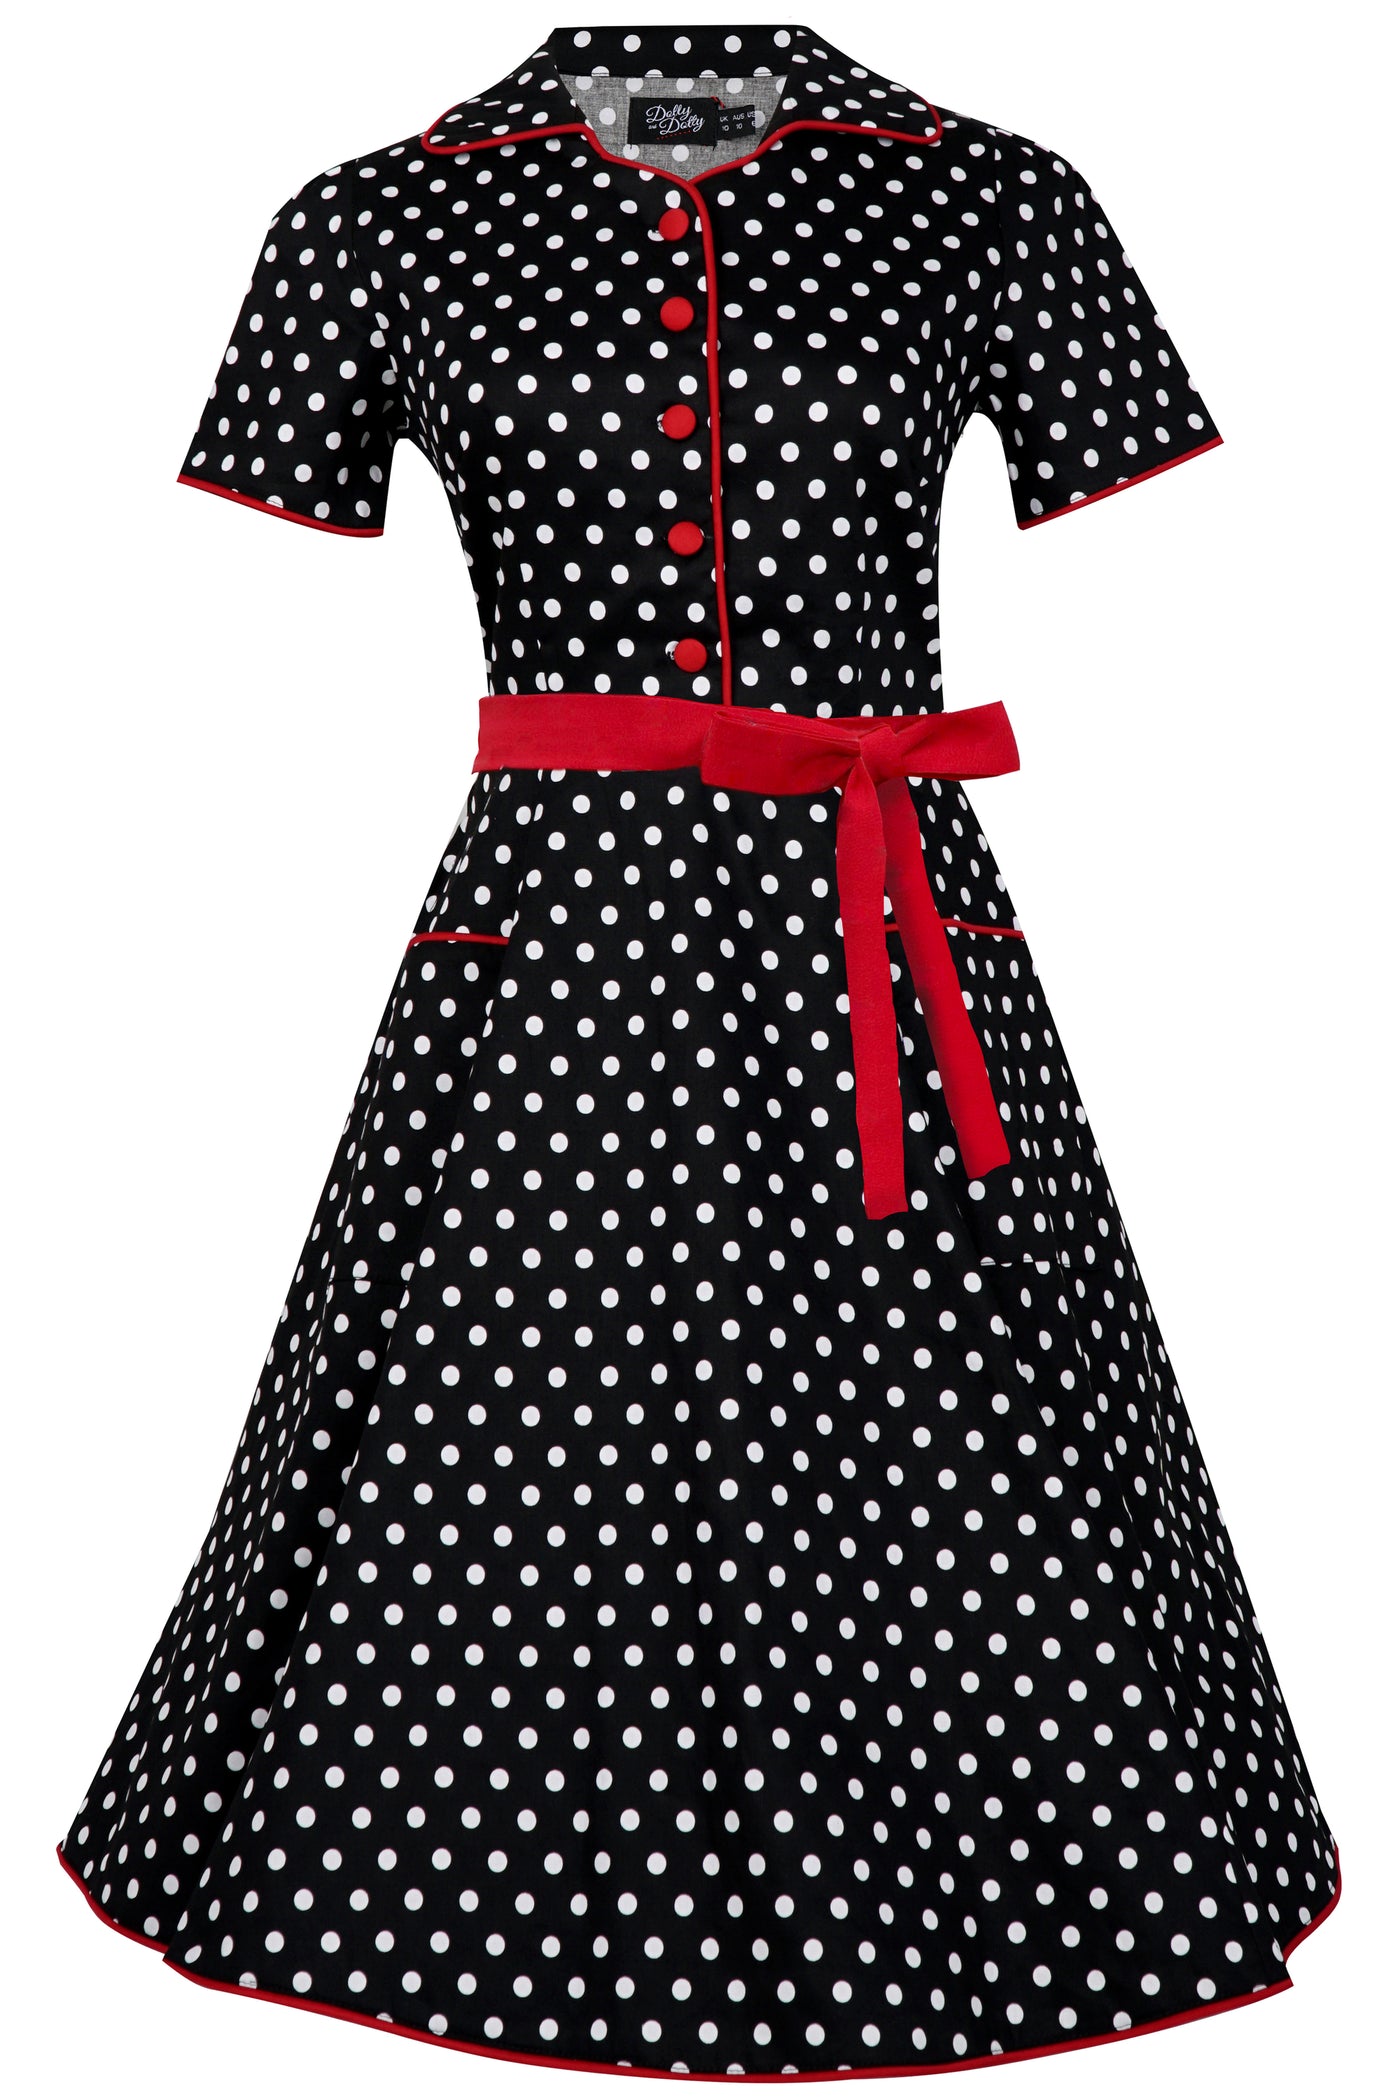 Penelope Rockabilly Black Polka Dot Shirt Dress